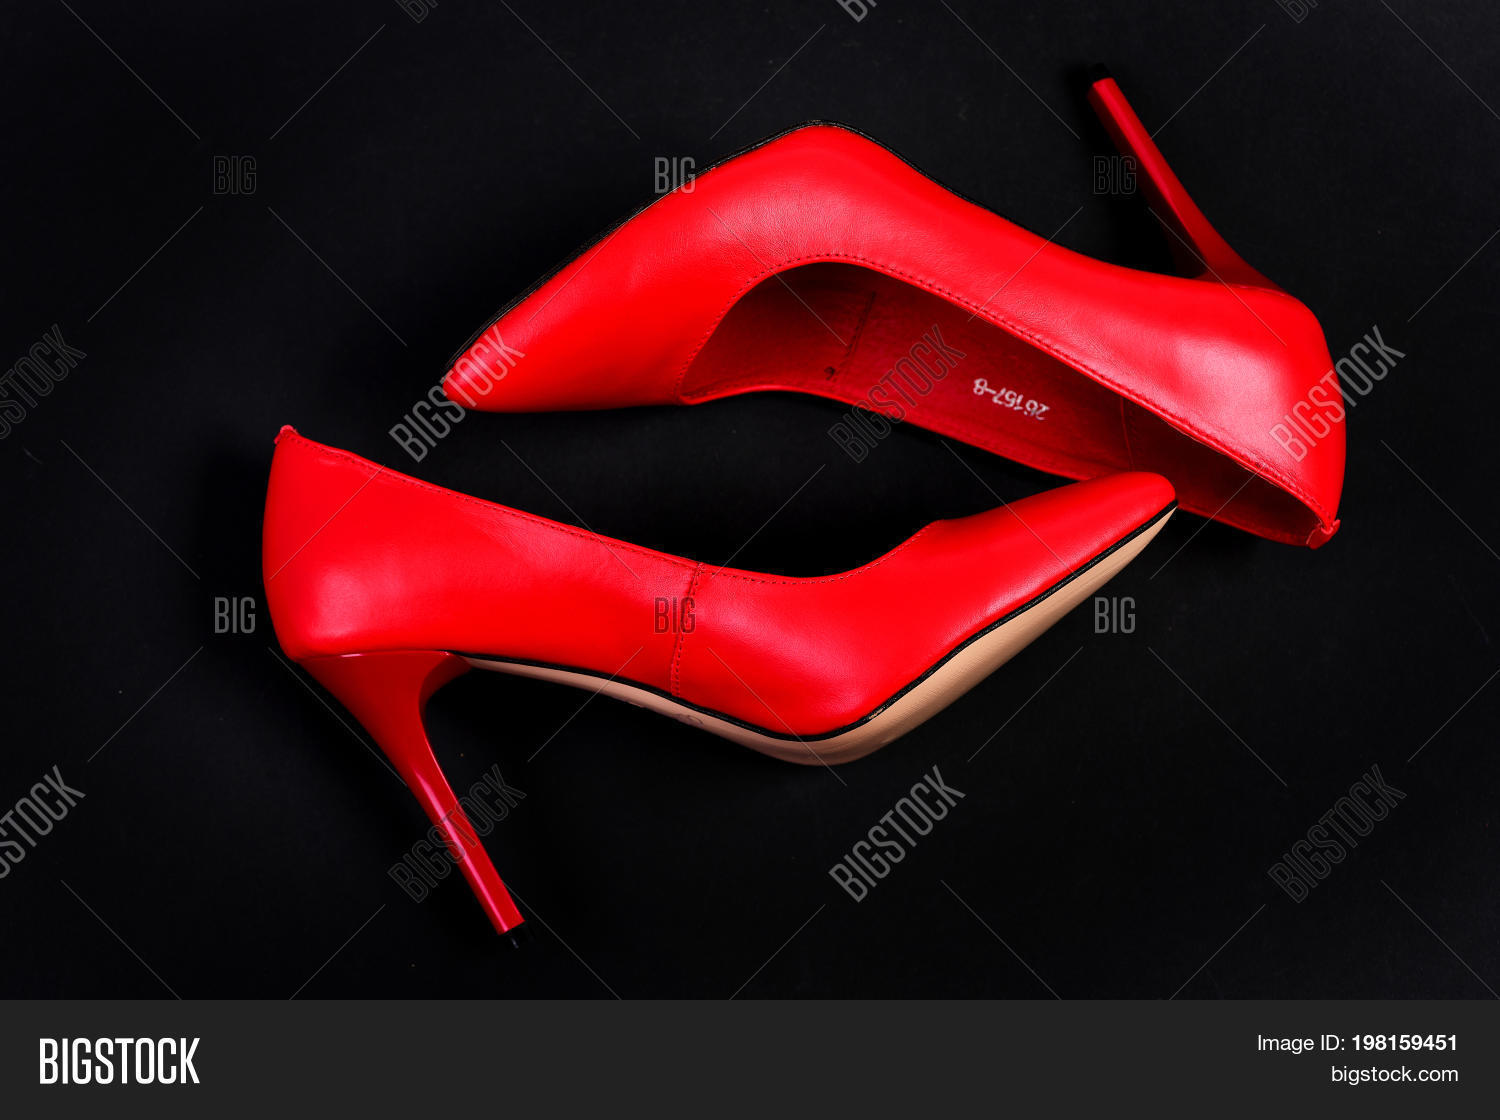 Shoe image